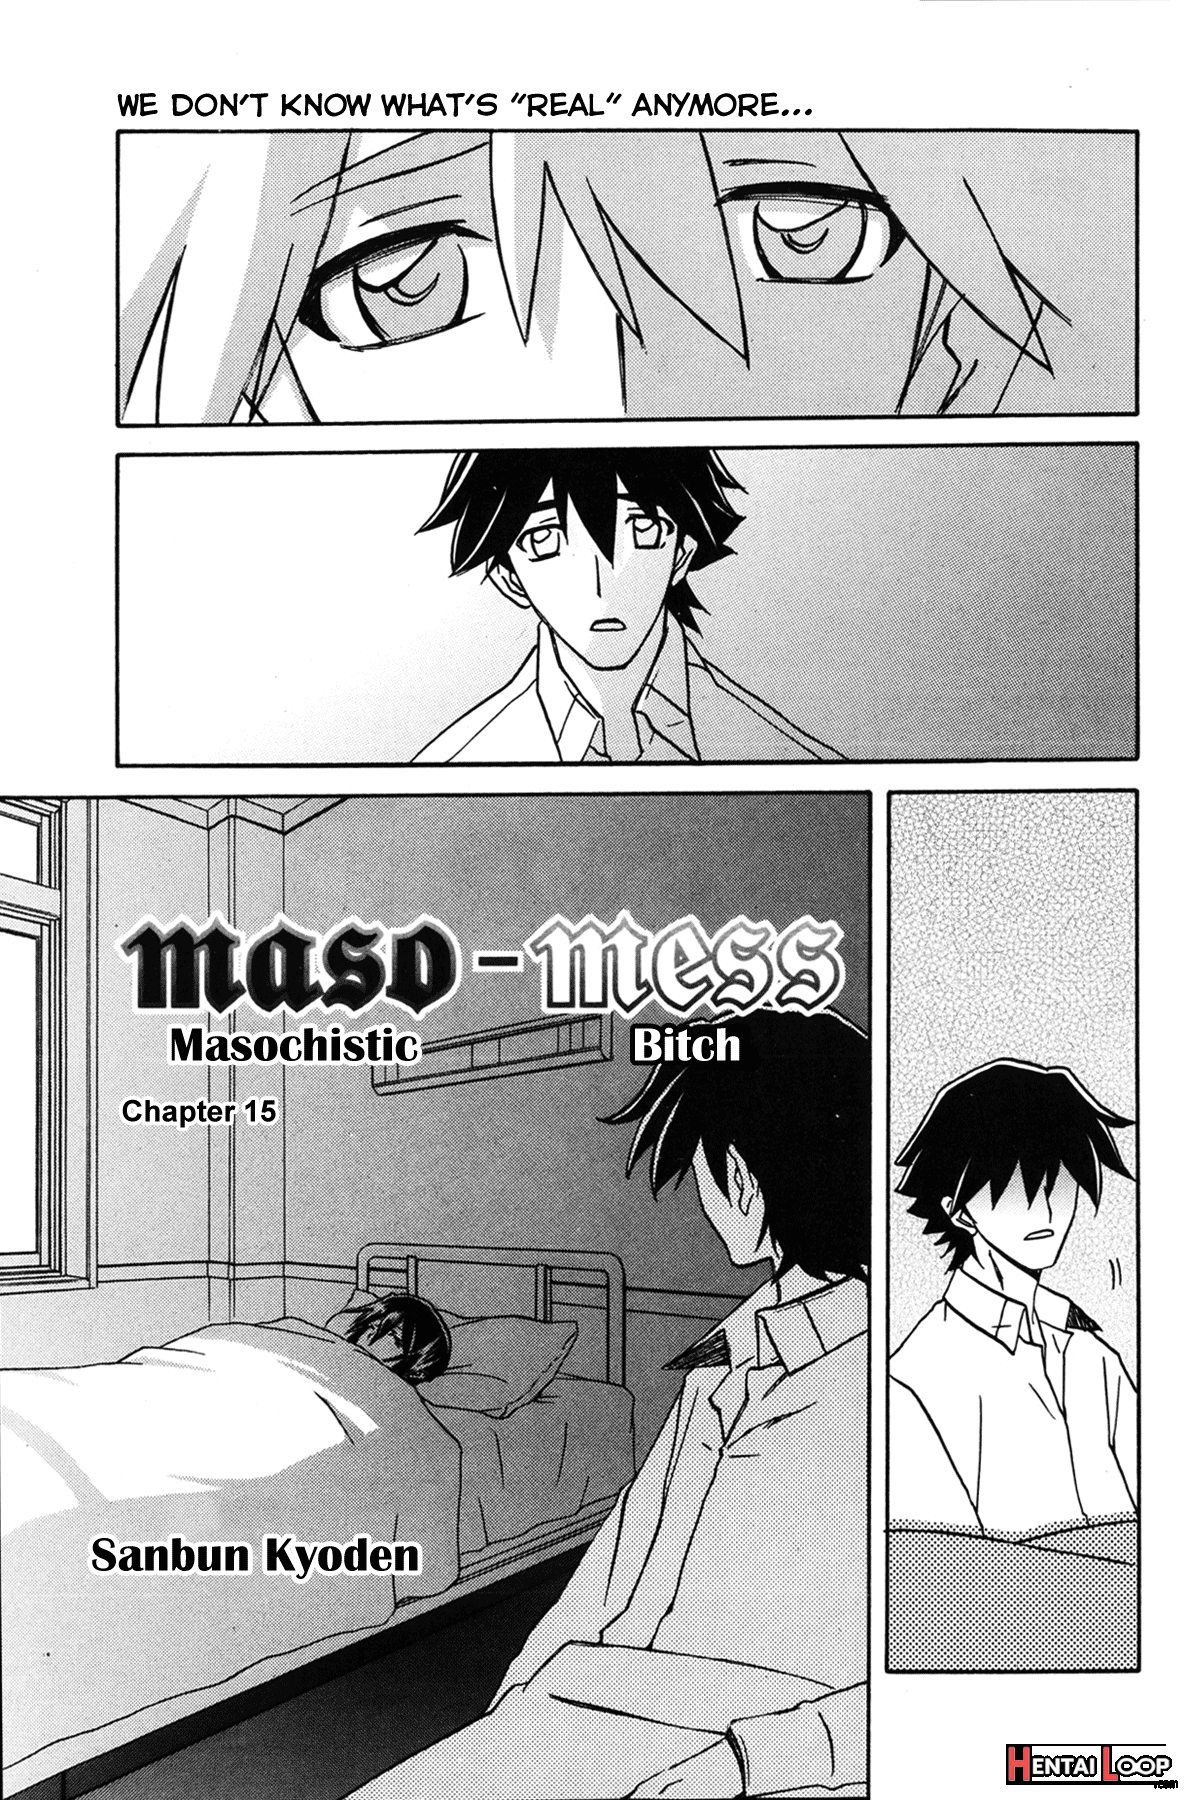 Maso-mess page 234